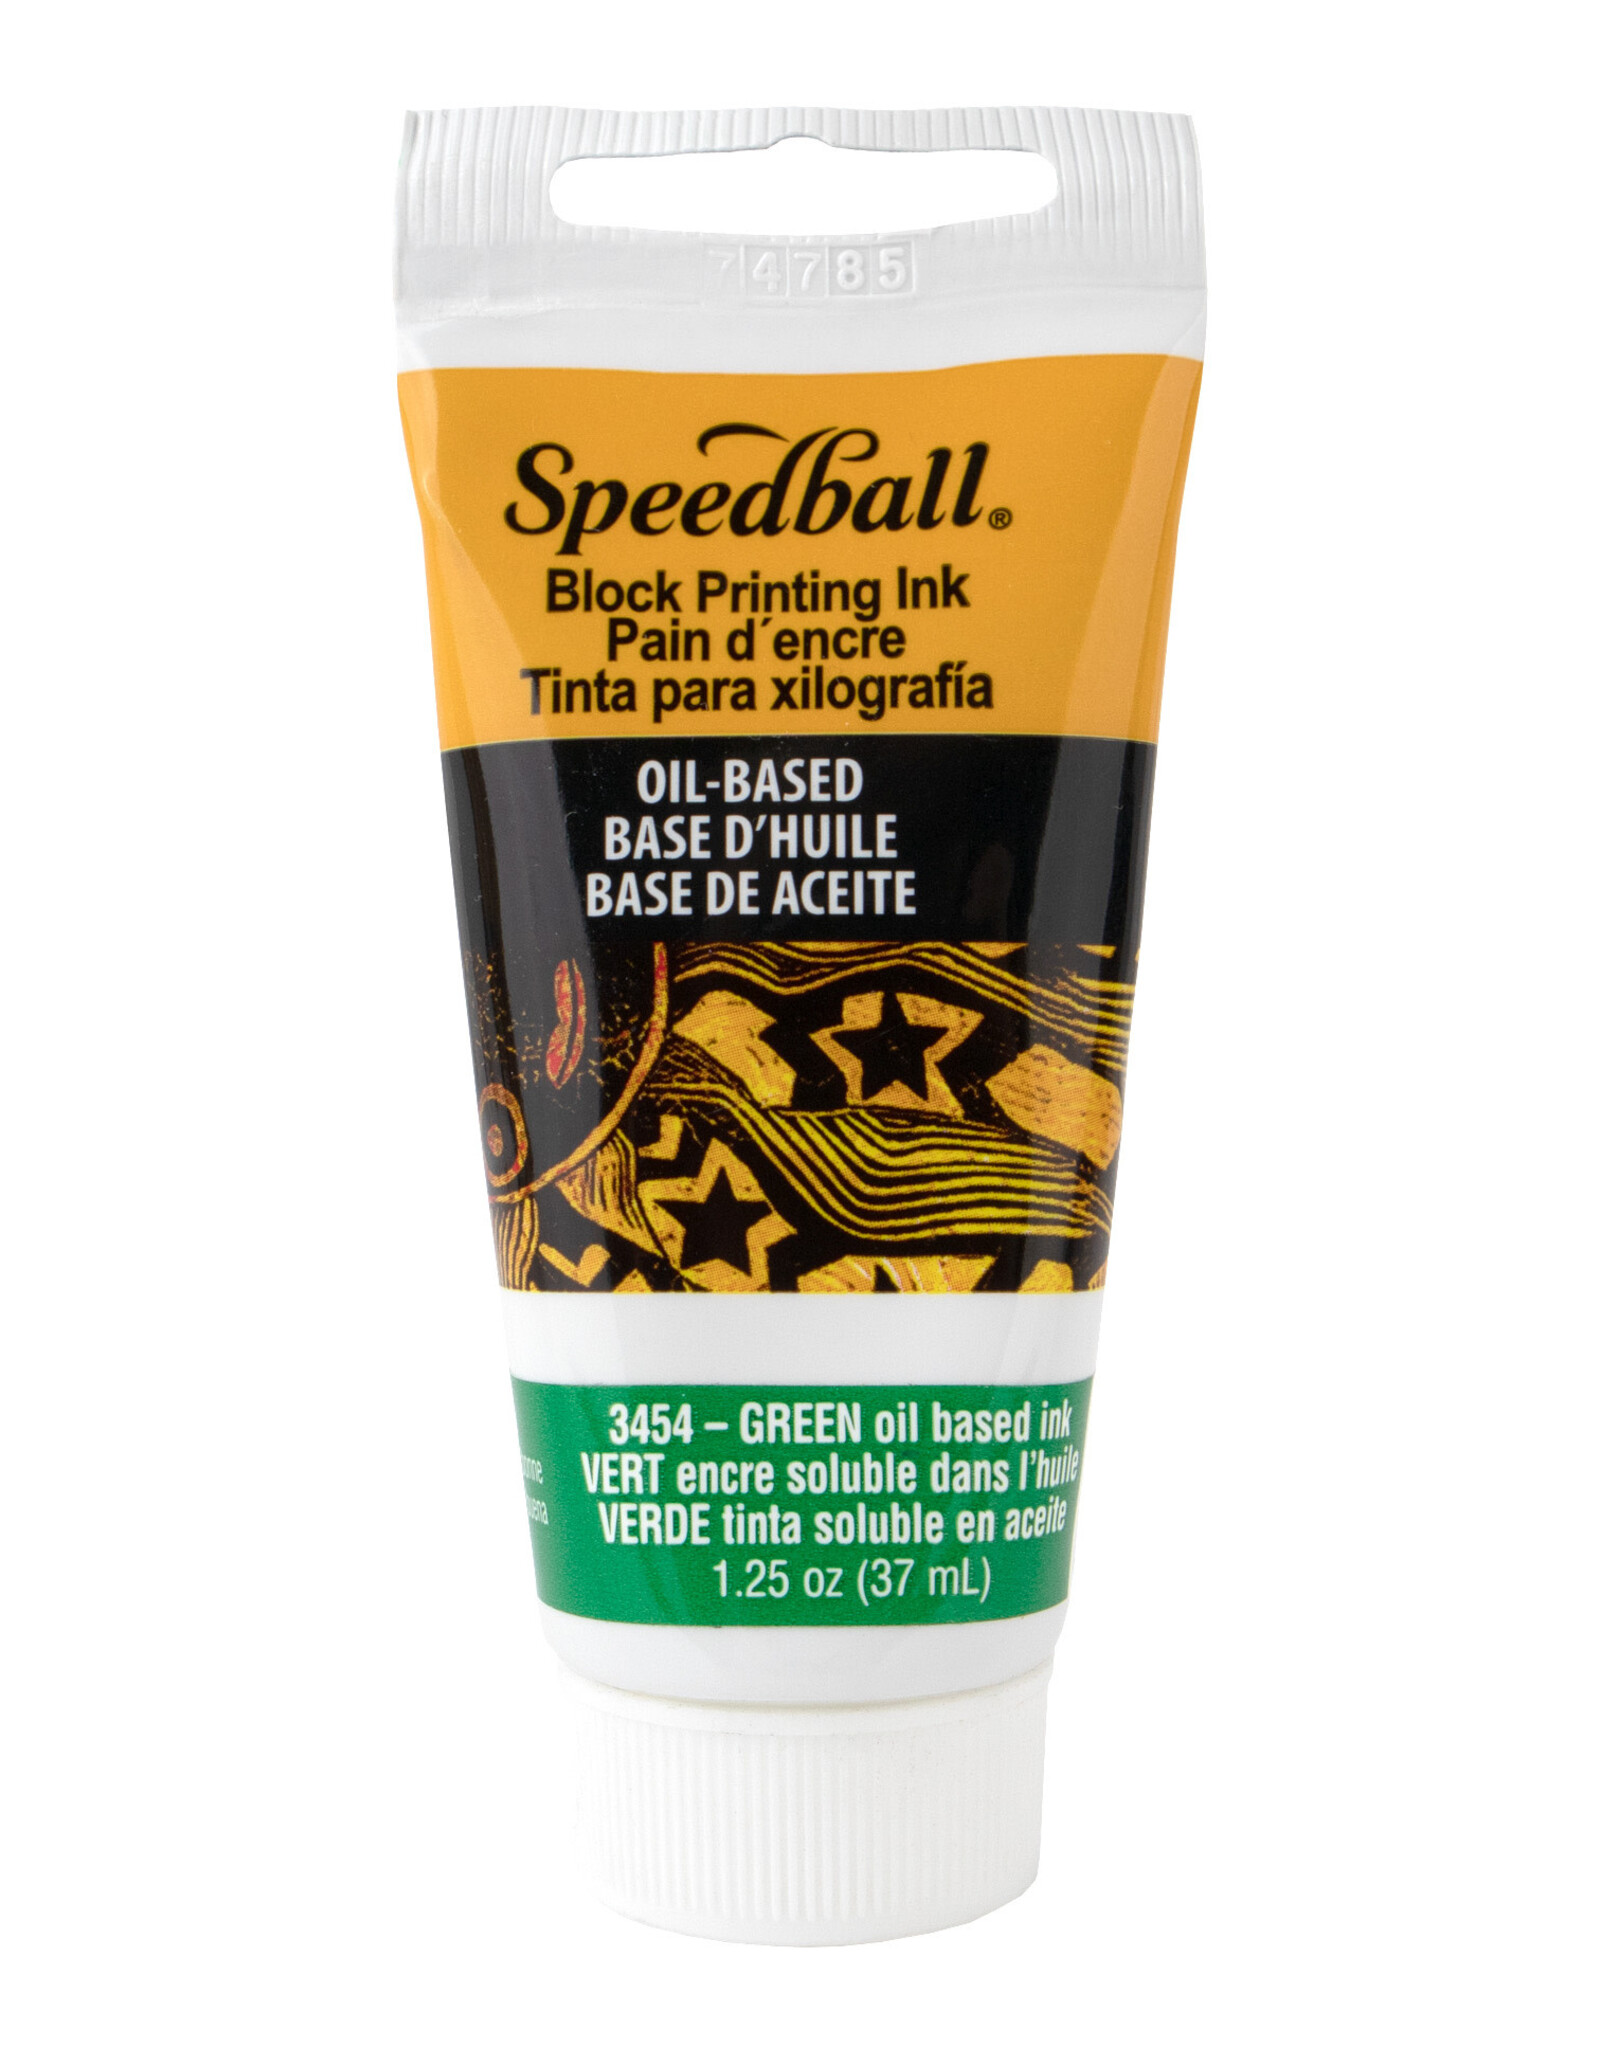 SPEEDBALL ART PRODUCTS Speedball Oil-Based Block Printing Ink, Green, 1.25oz